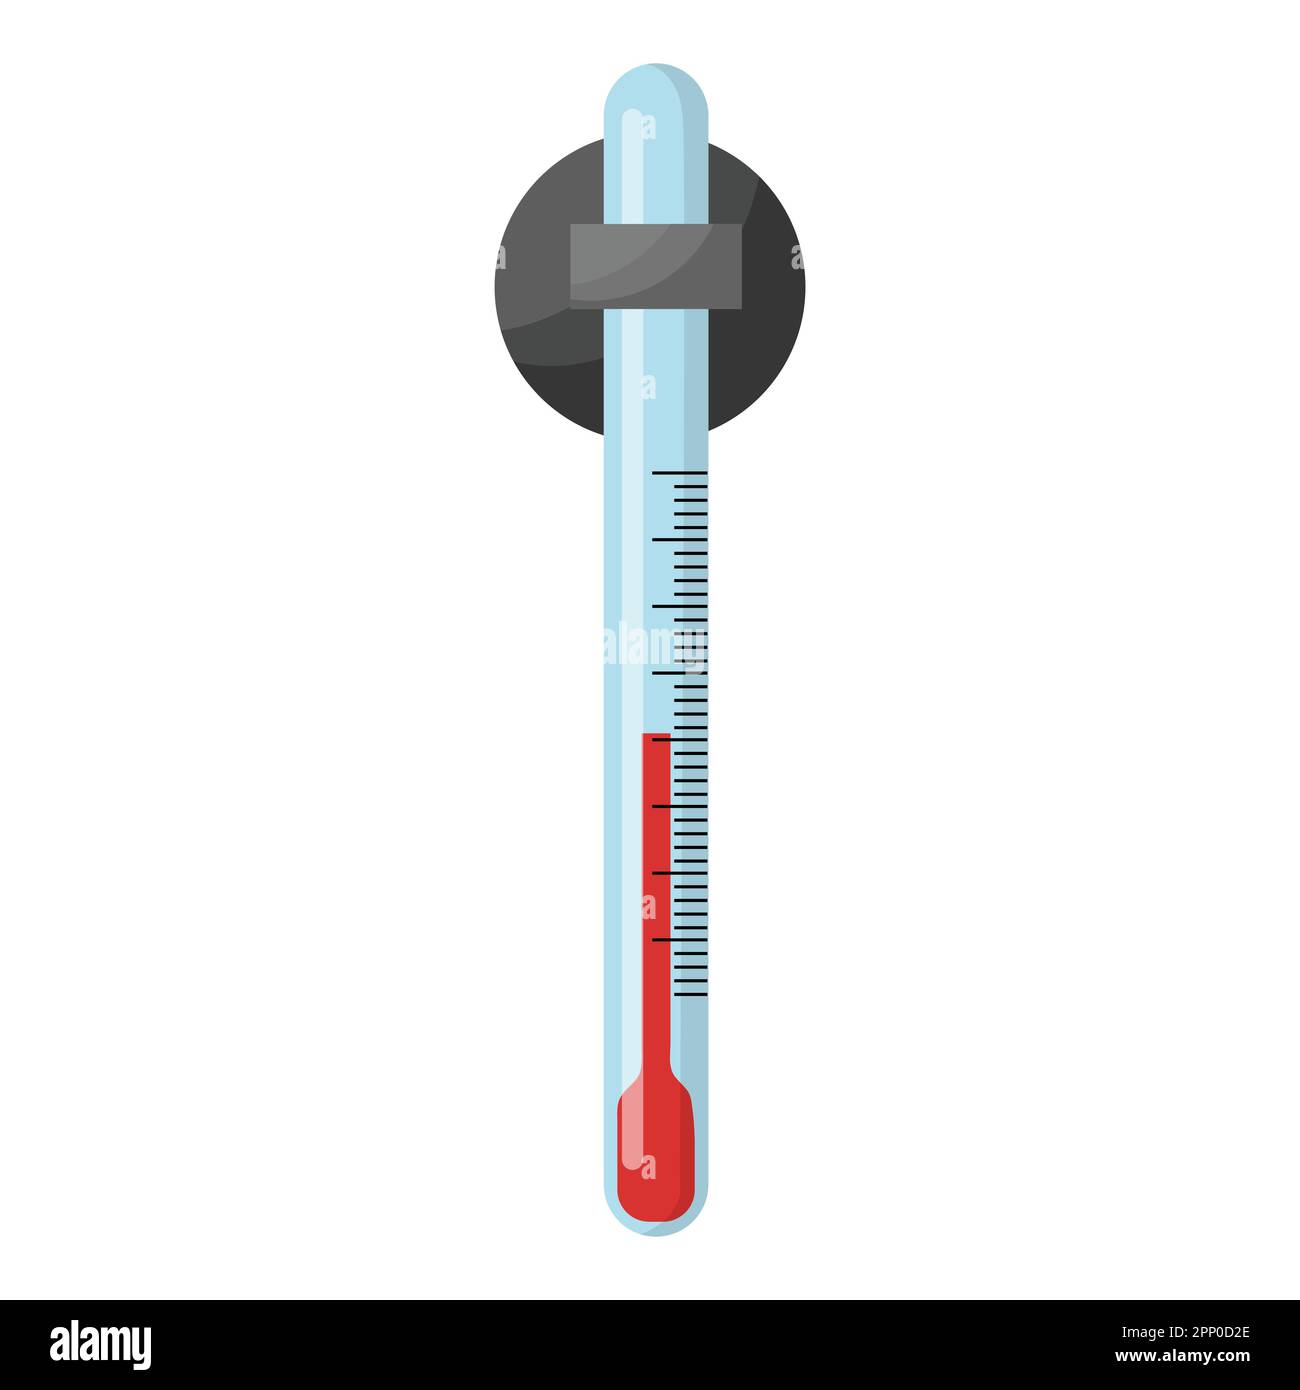 Laboratory thermometer -Fotos und -Bildmaterial in hoher Auflösung – Alamy